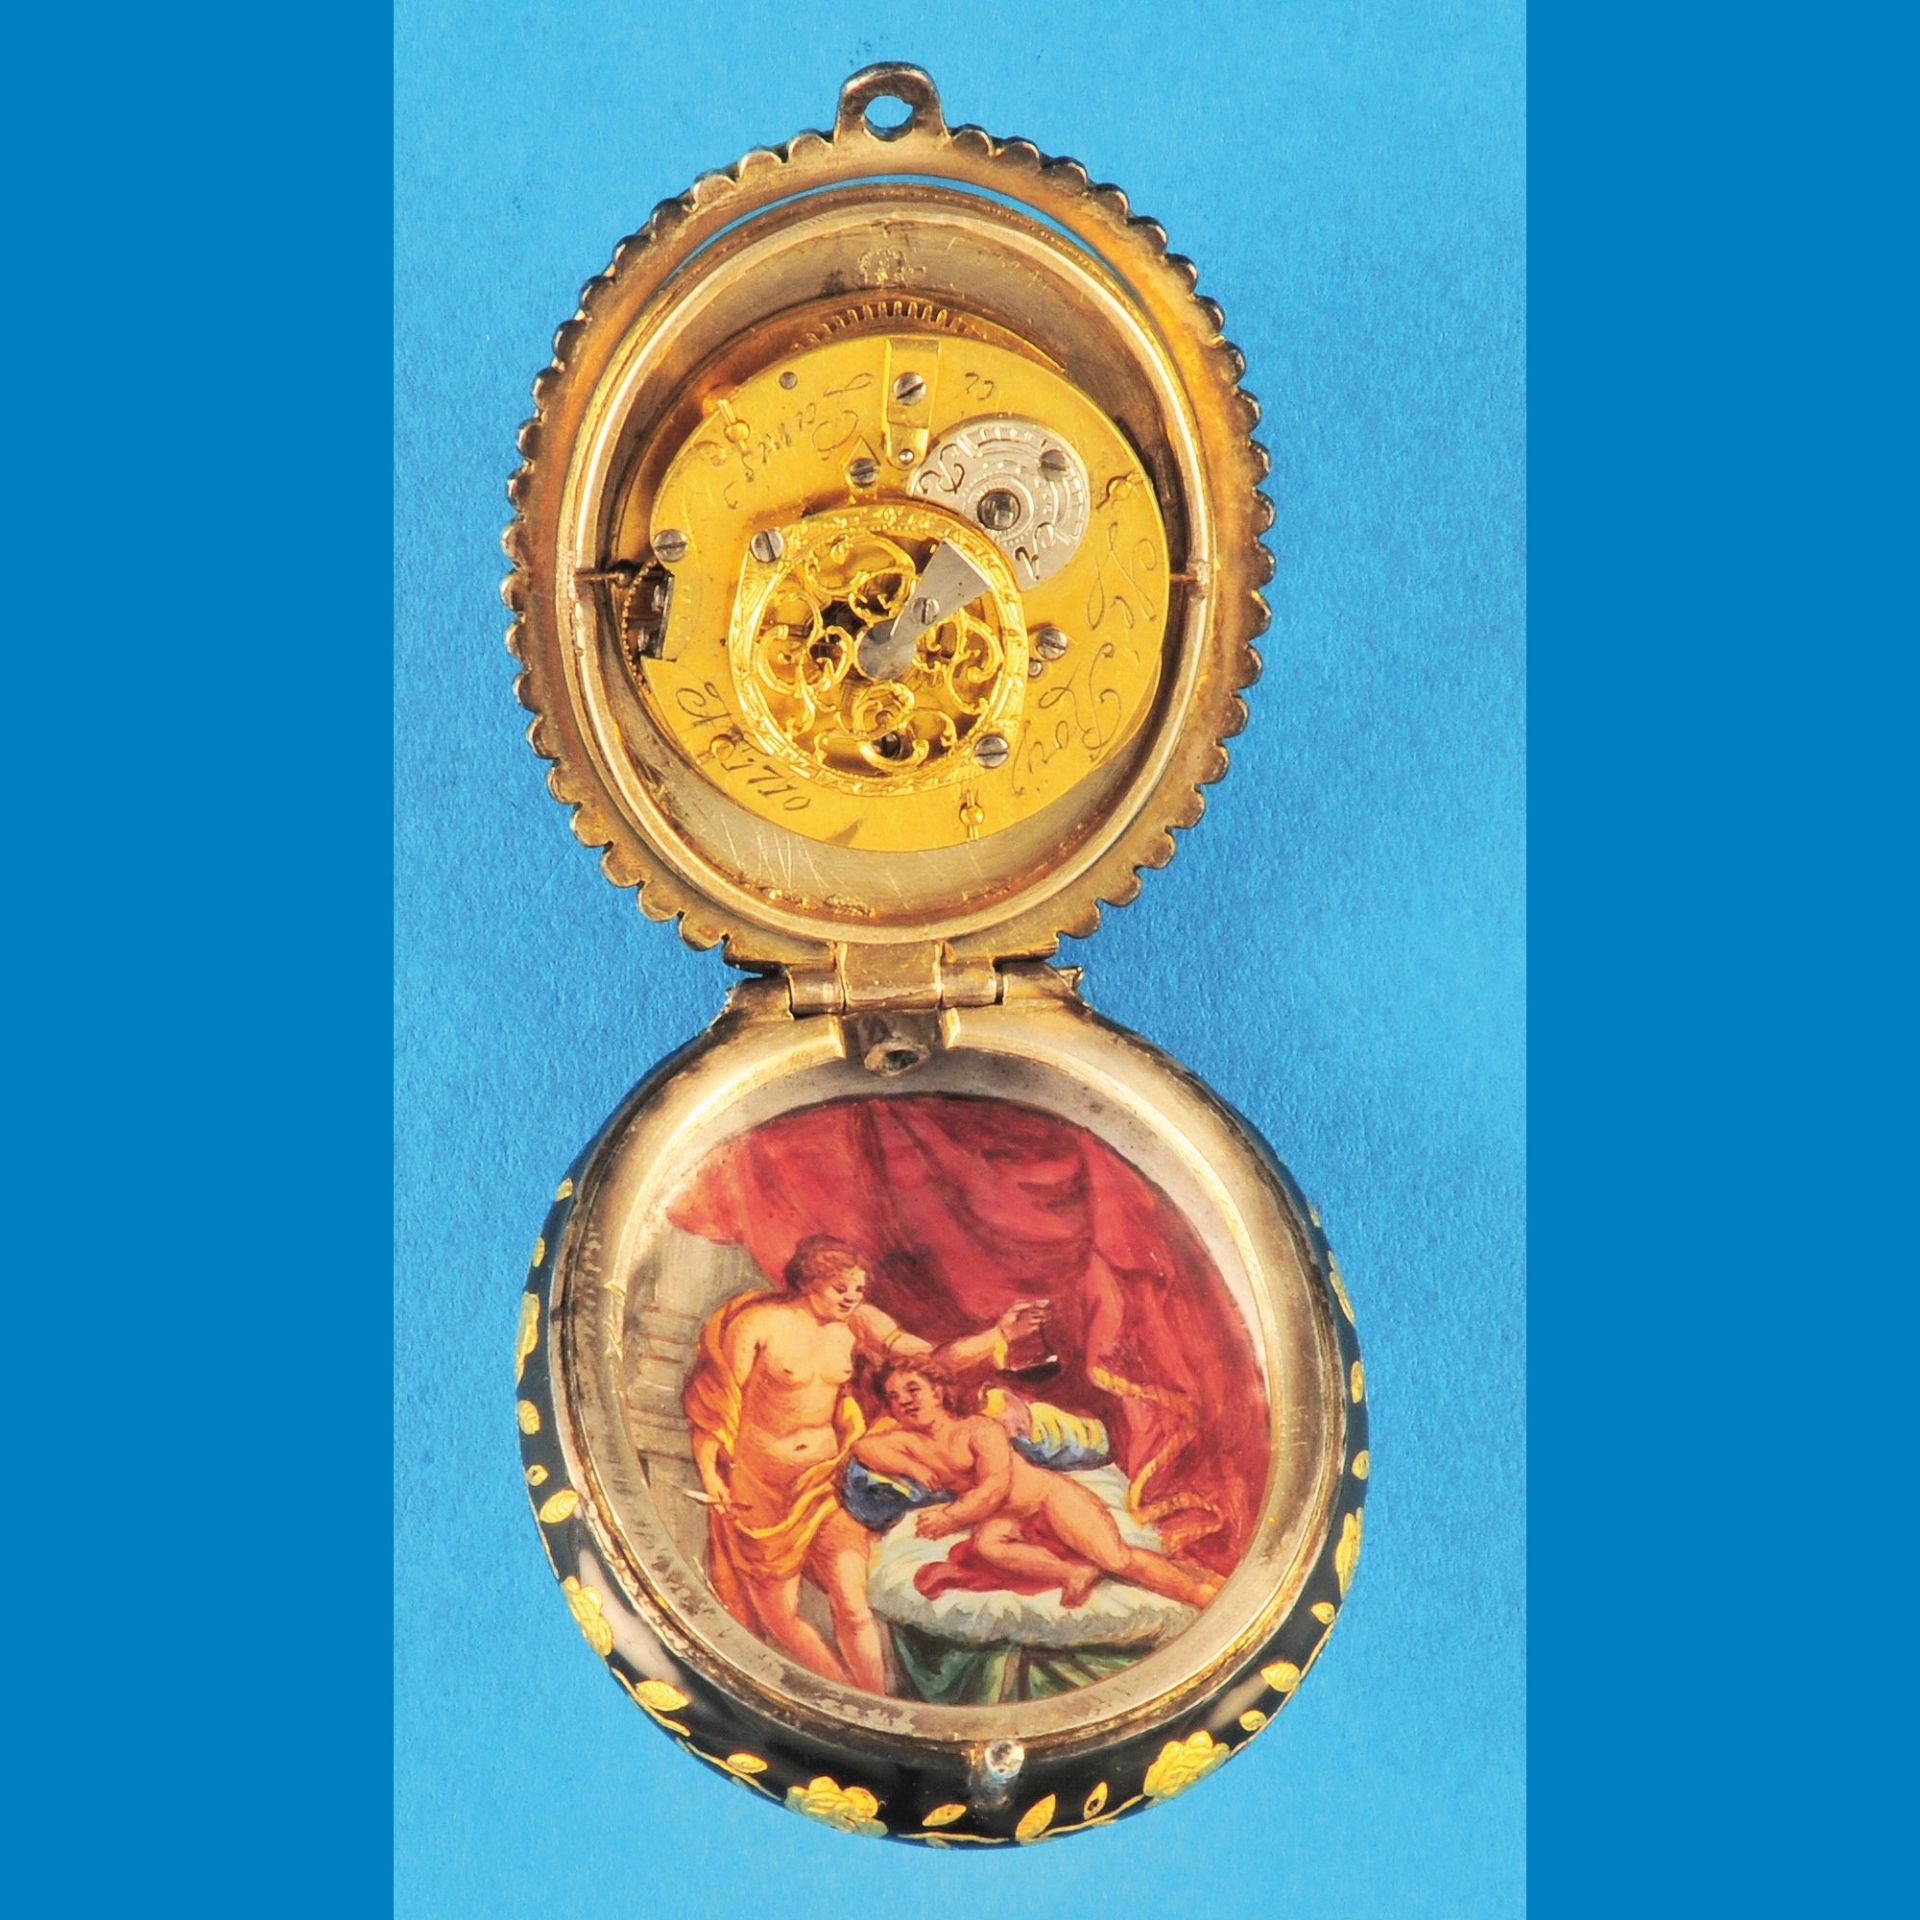 Oval silver/enamel necklace watch with spindle movement, Le Roy à Paris